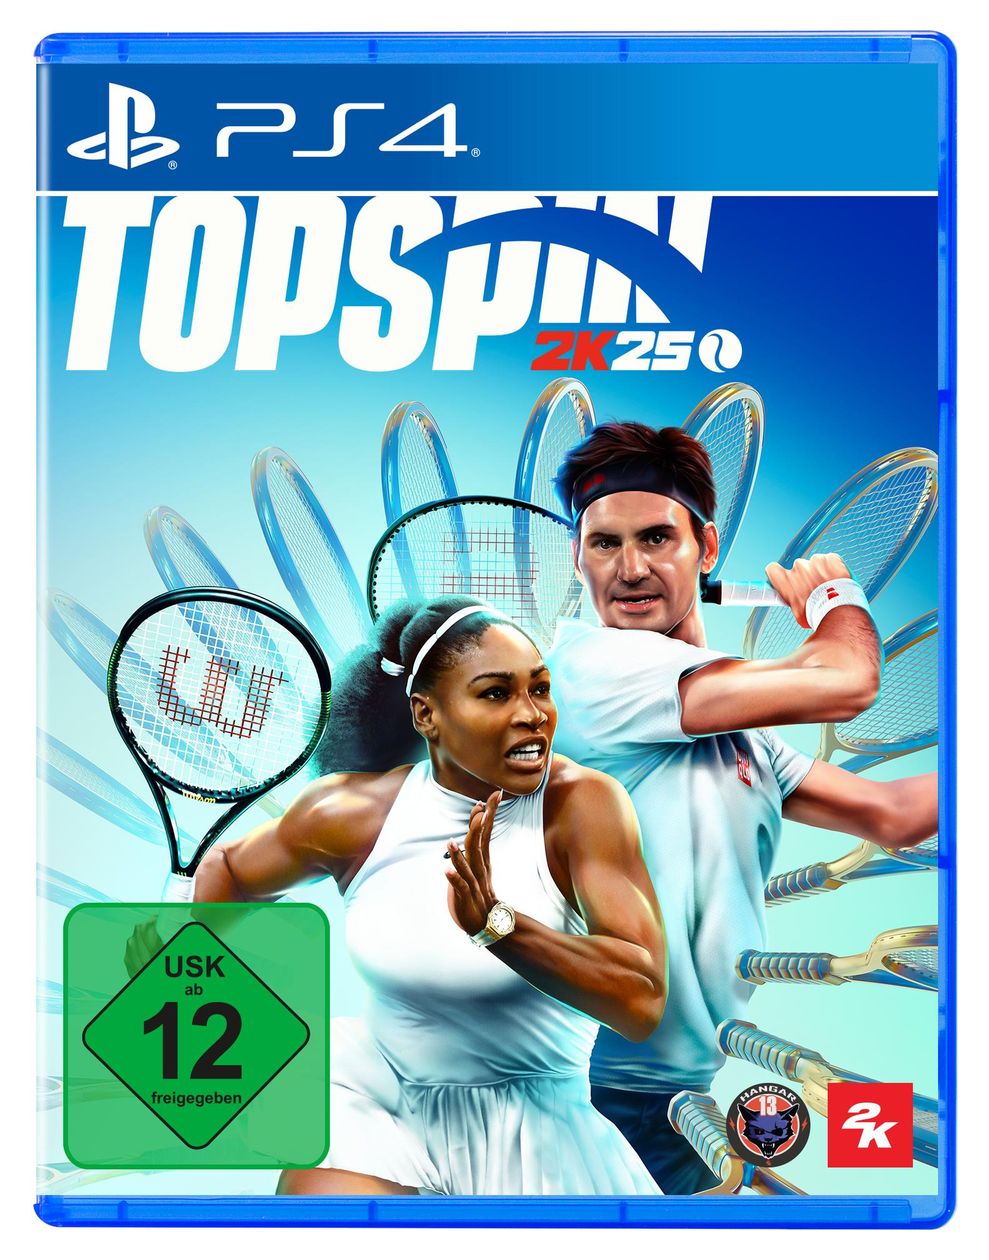 TopSpin 2K25 Standard Edition (PlayStation 4) 